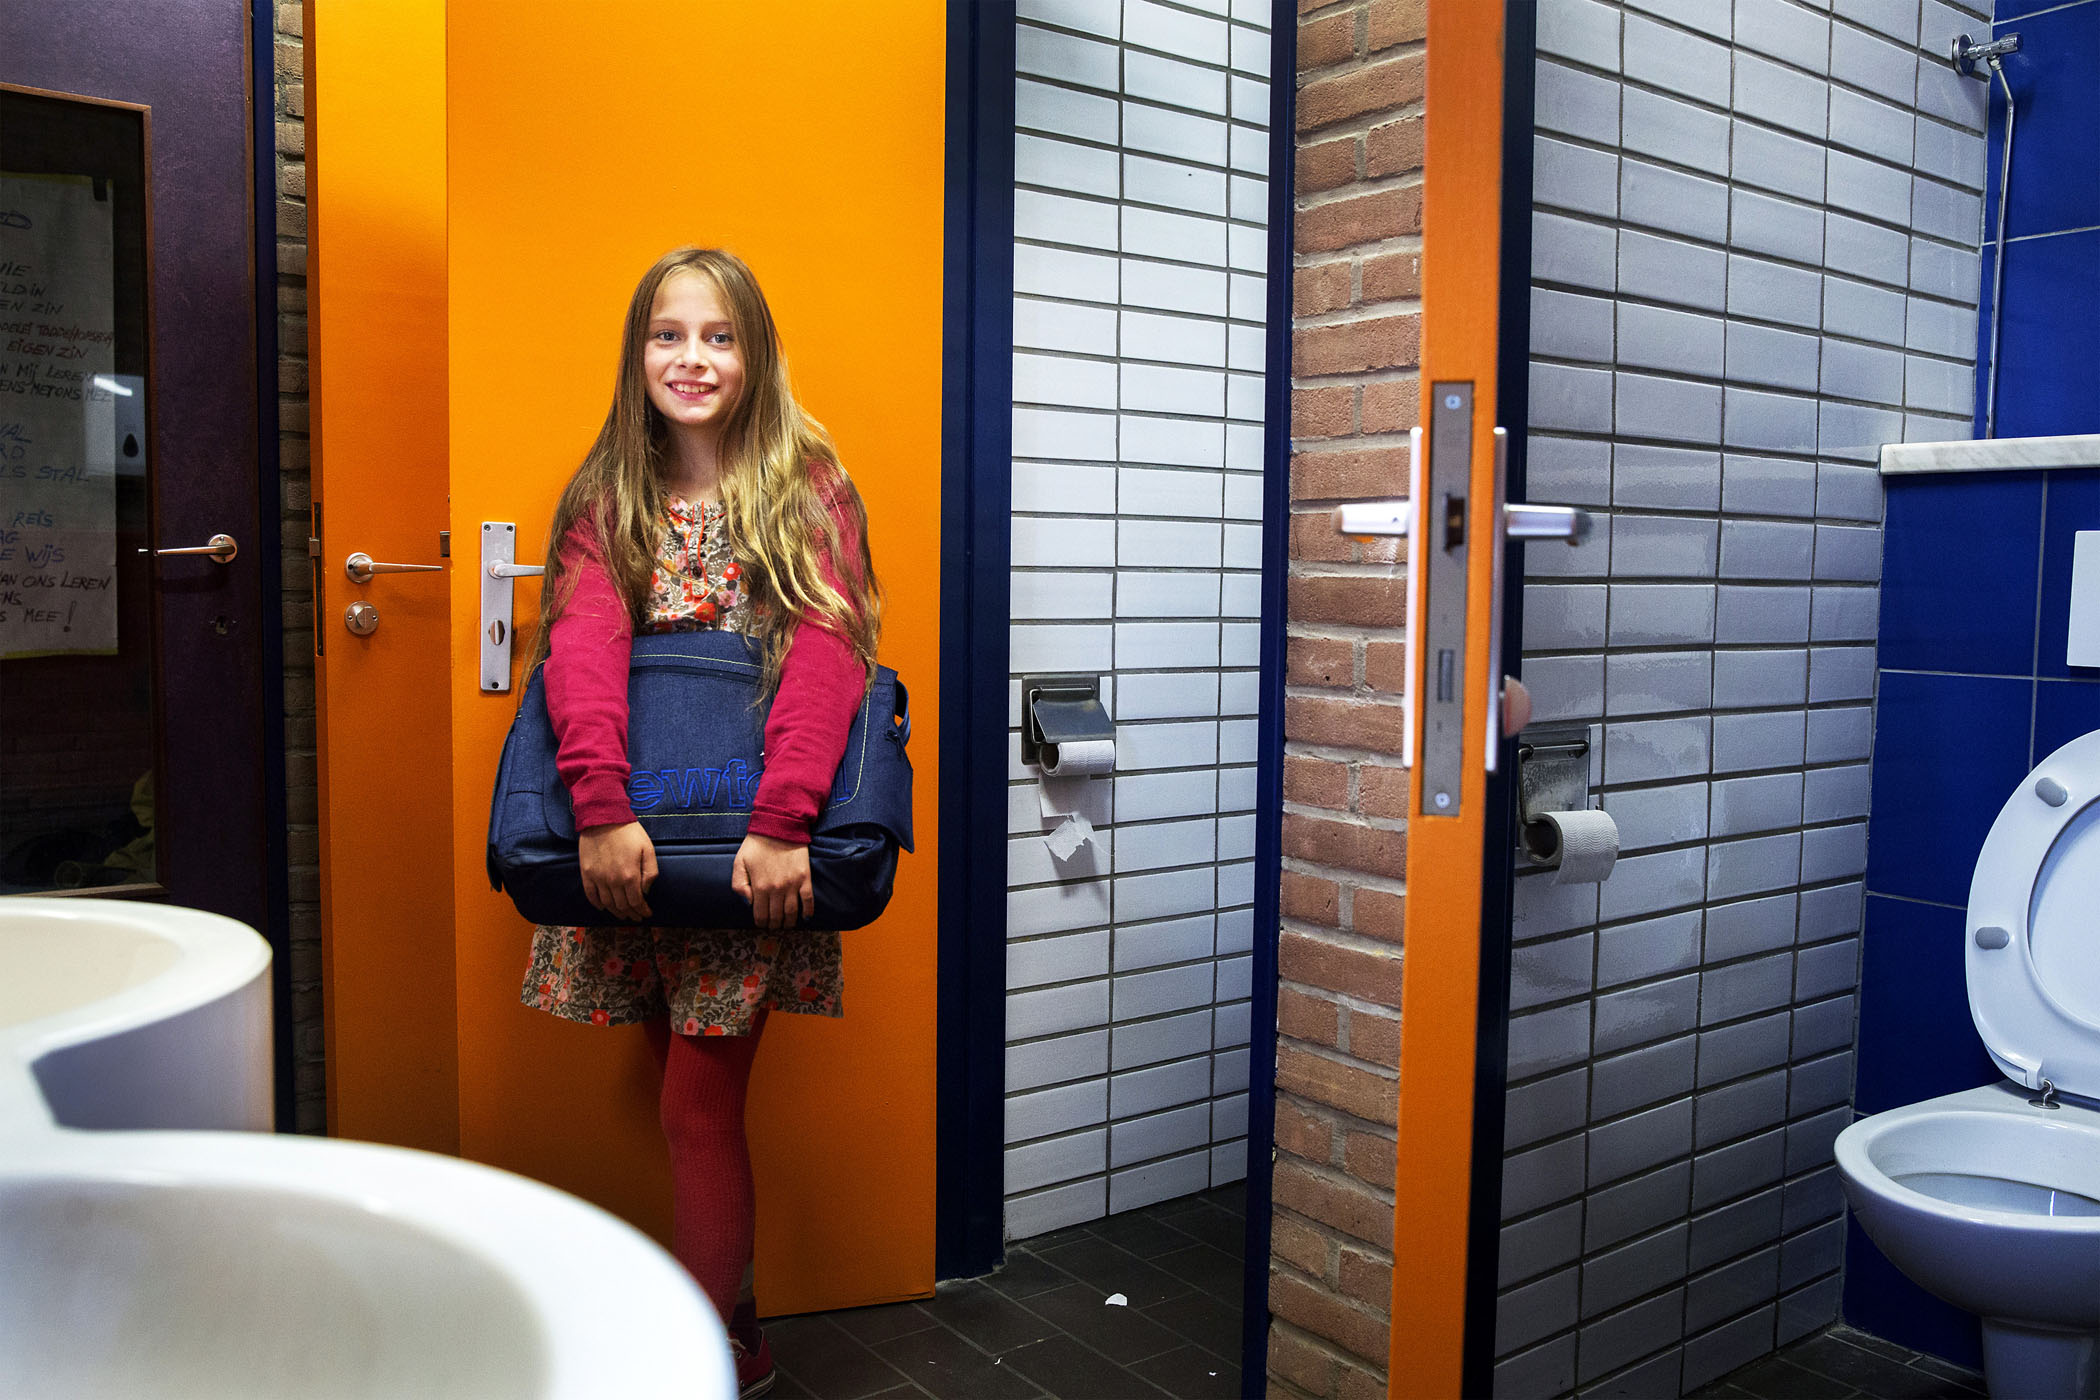 Girl woman peeing washroom bathroom toilet